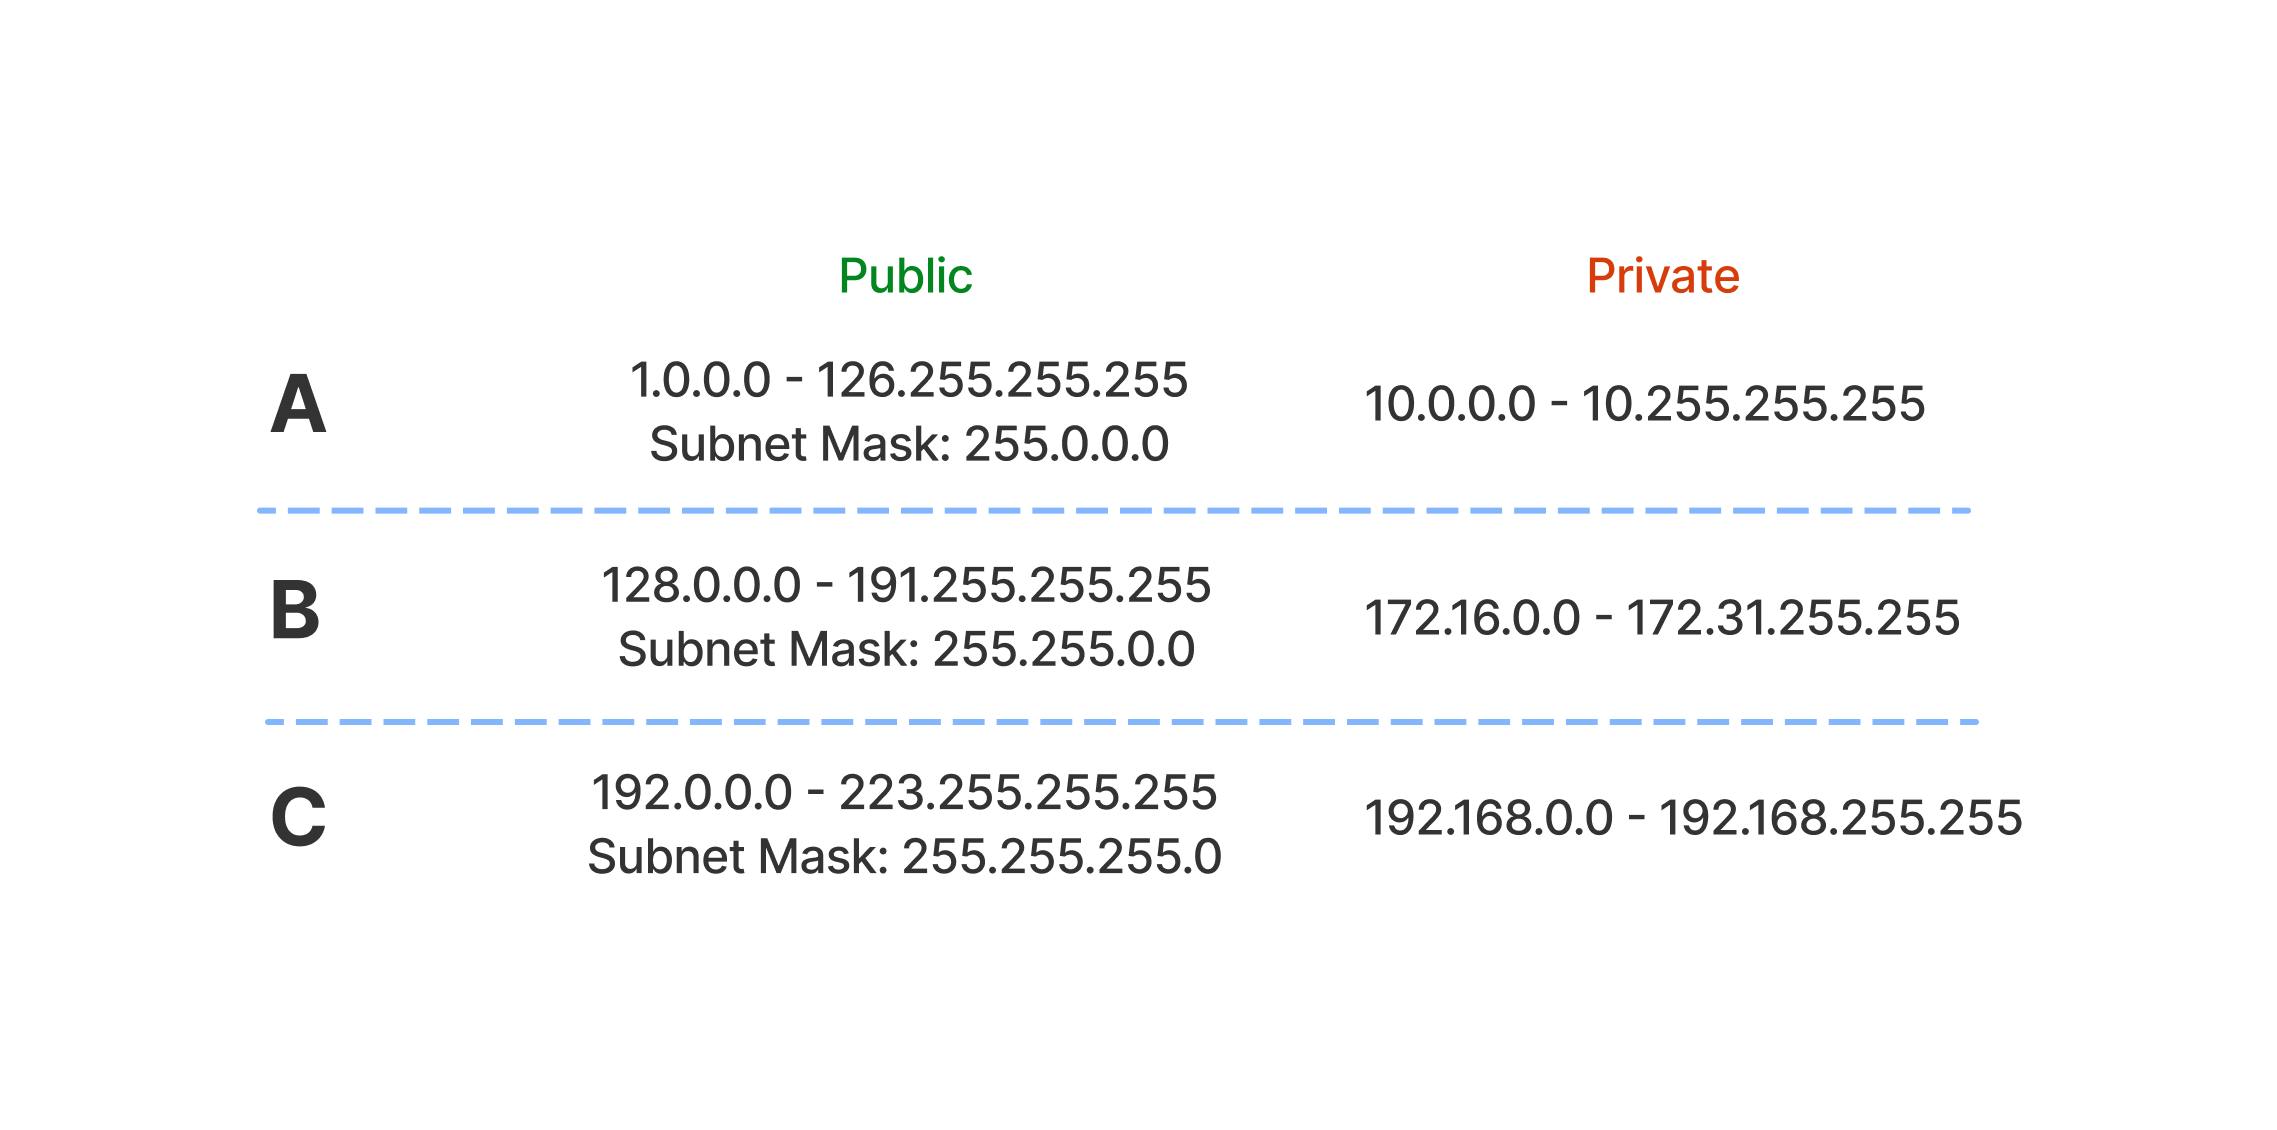 Public and Private IP Addresses